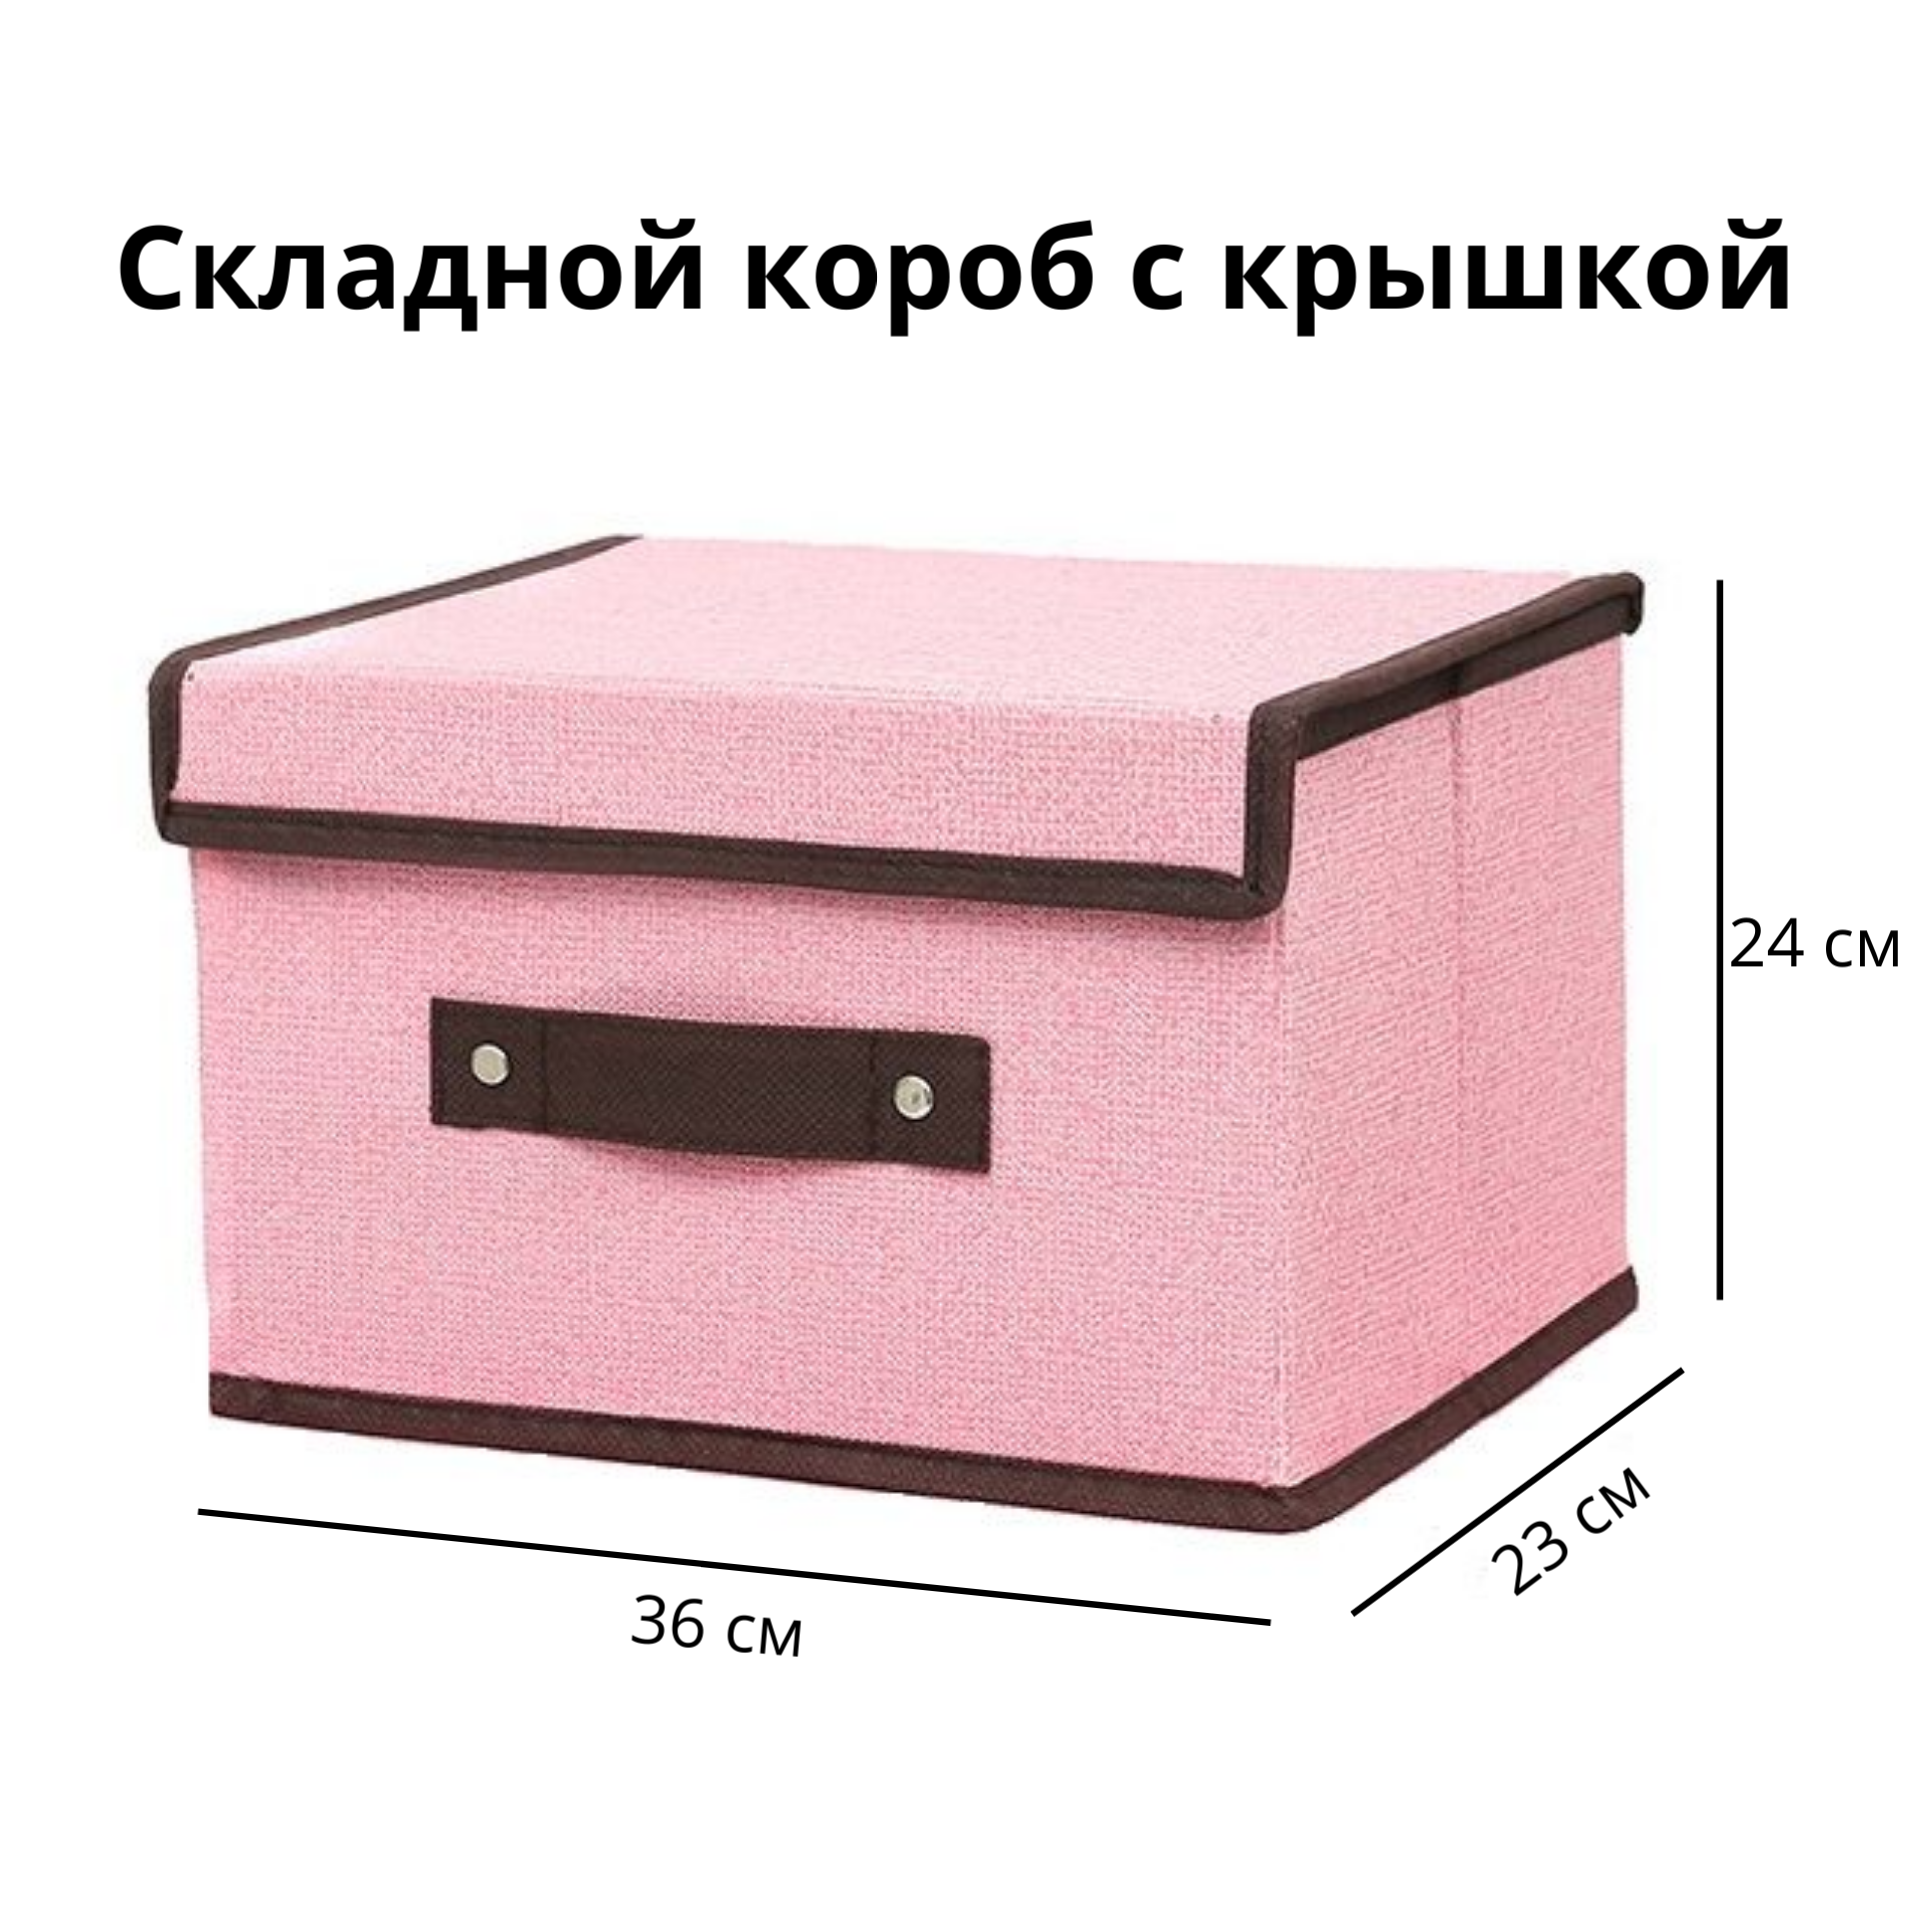 Короб для хранения вещей 36x23x24, розовый